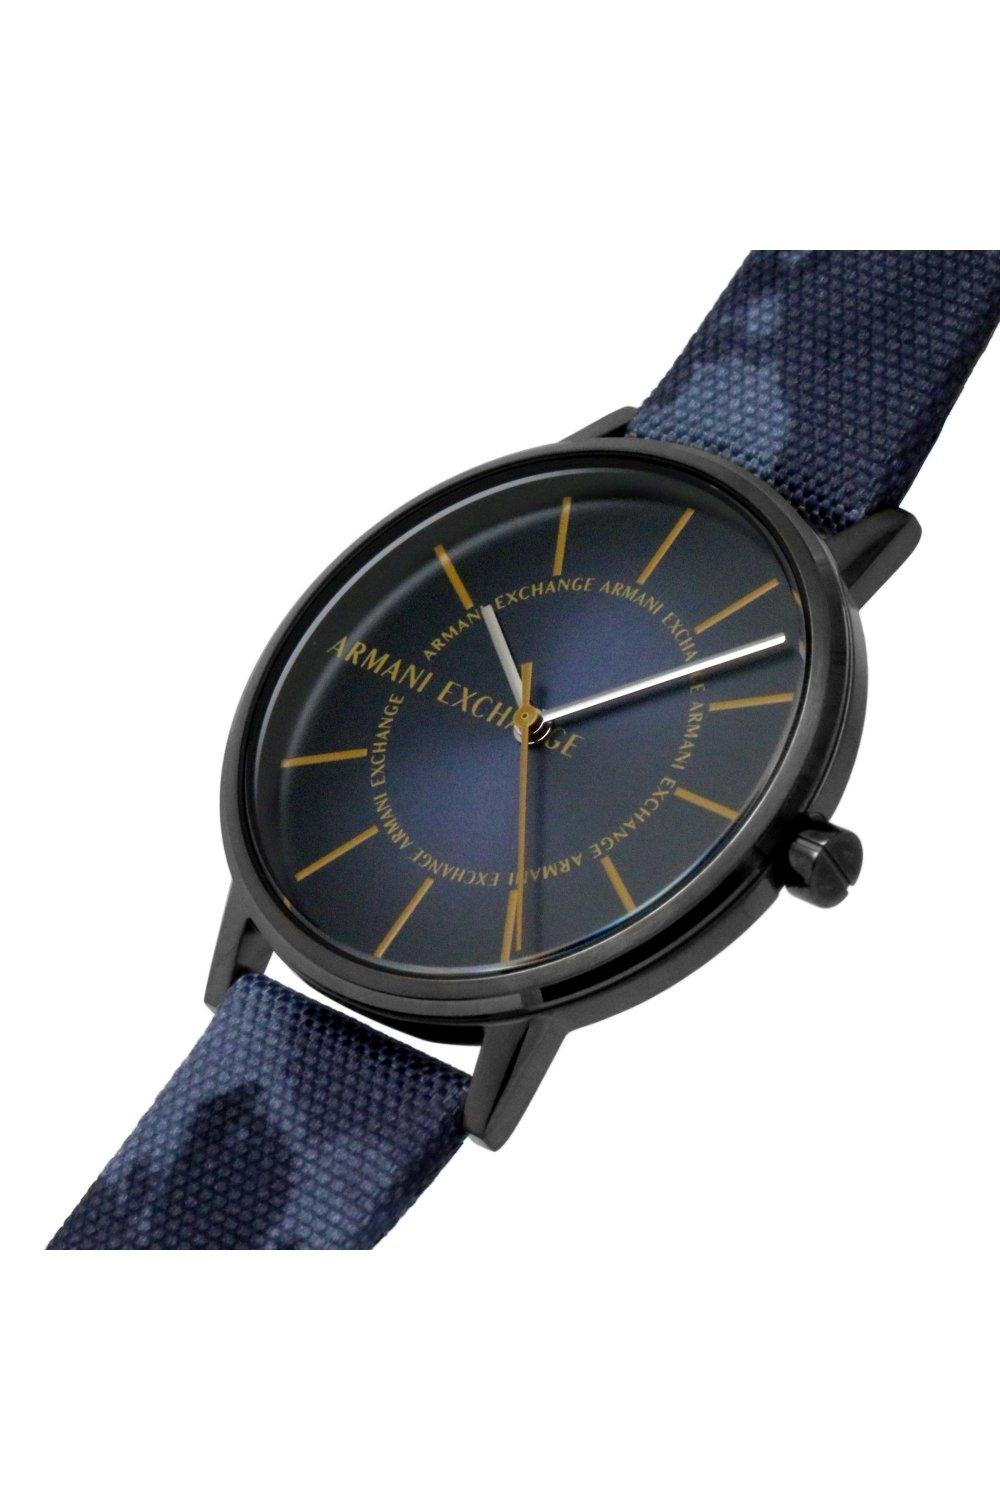 Steel | - Quartz Watch Fashion Exchange Stainless Watches | Armani Ax2750 Analogue